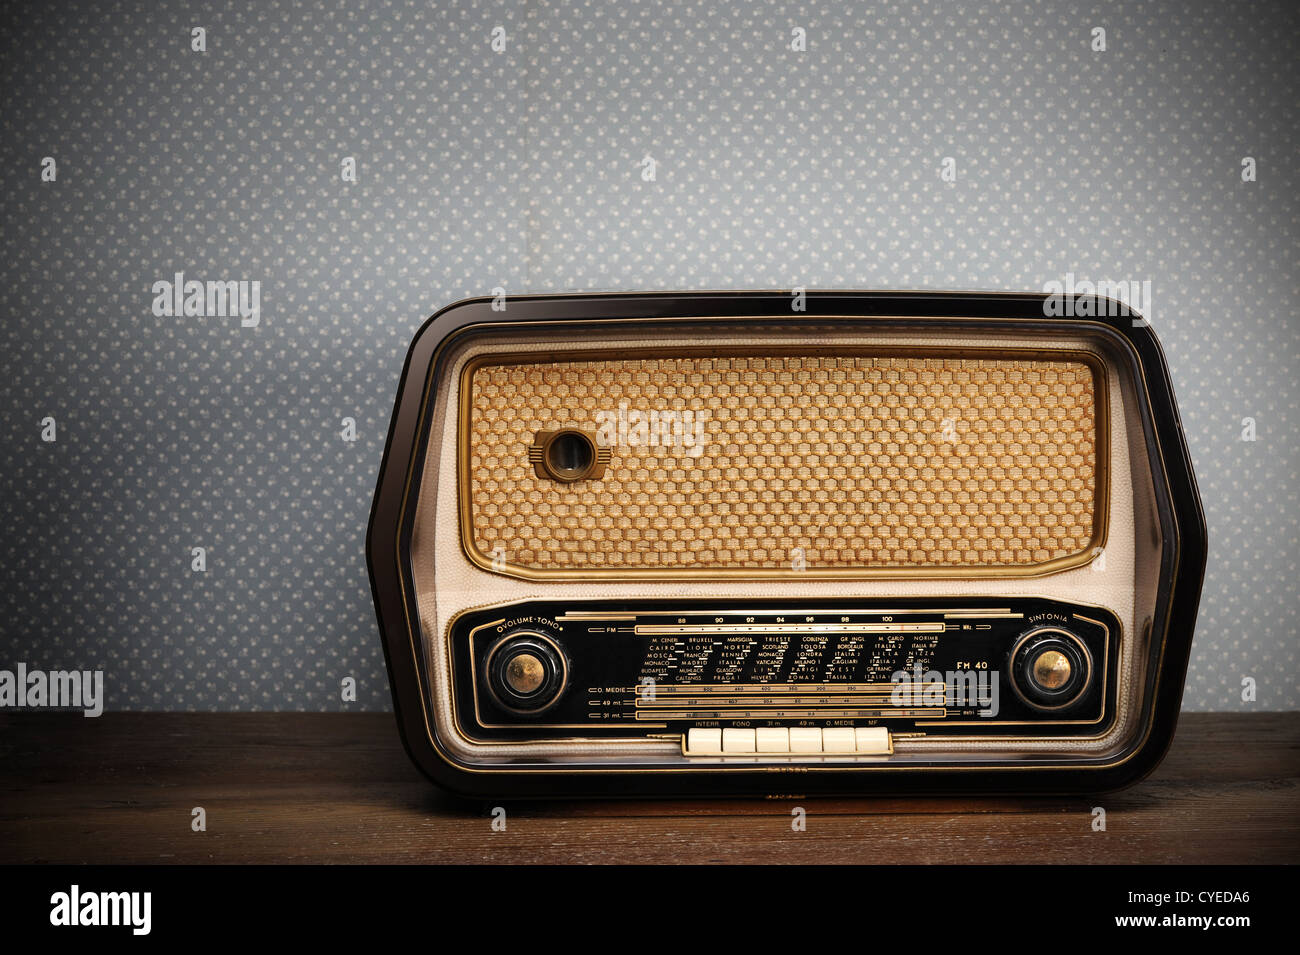 antique radio on vintage background Stock Photo